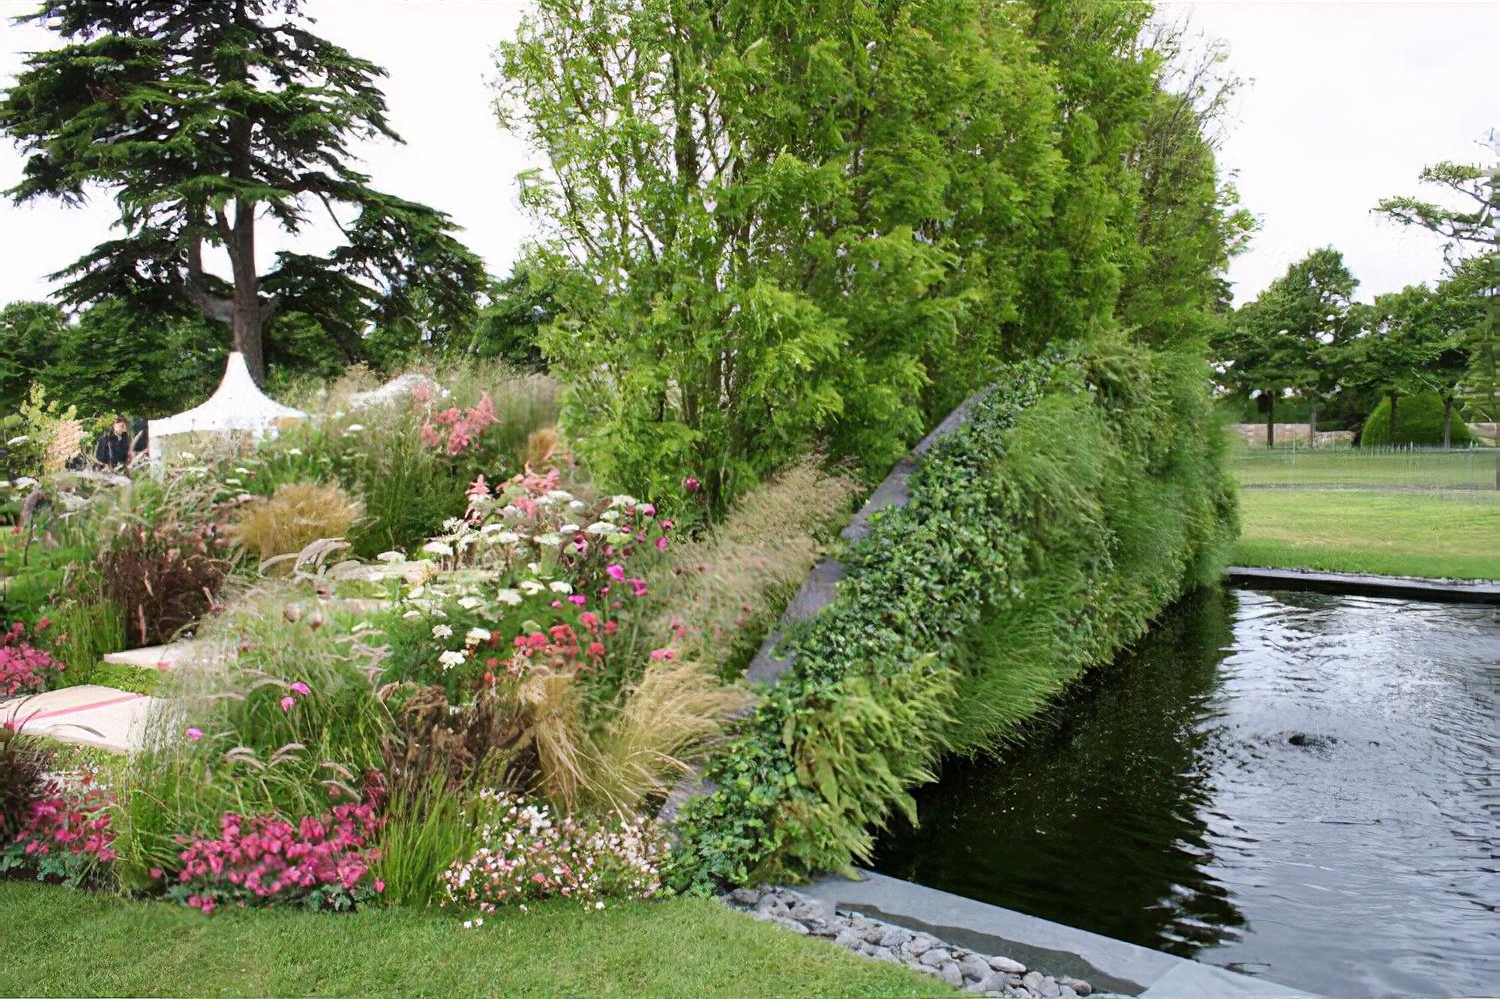 Hampton Court Flower Show 2012 Show Garden Bridge over troubled water garden by garden designer Anoushka Feiler.